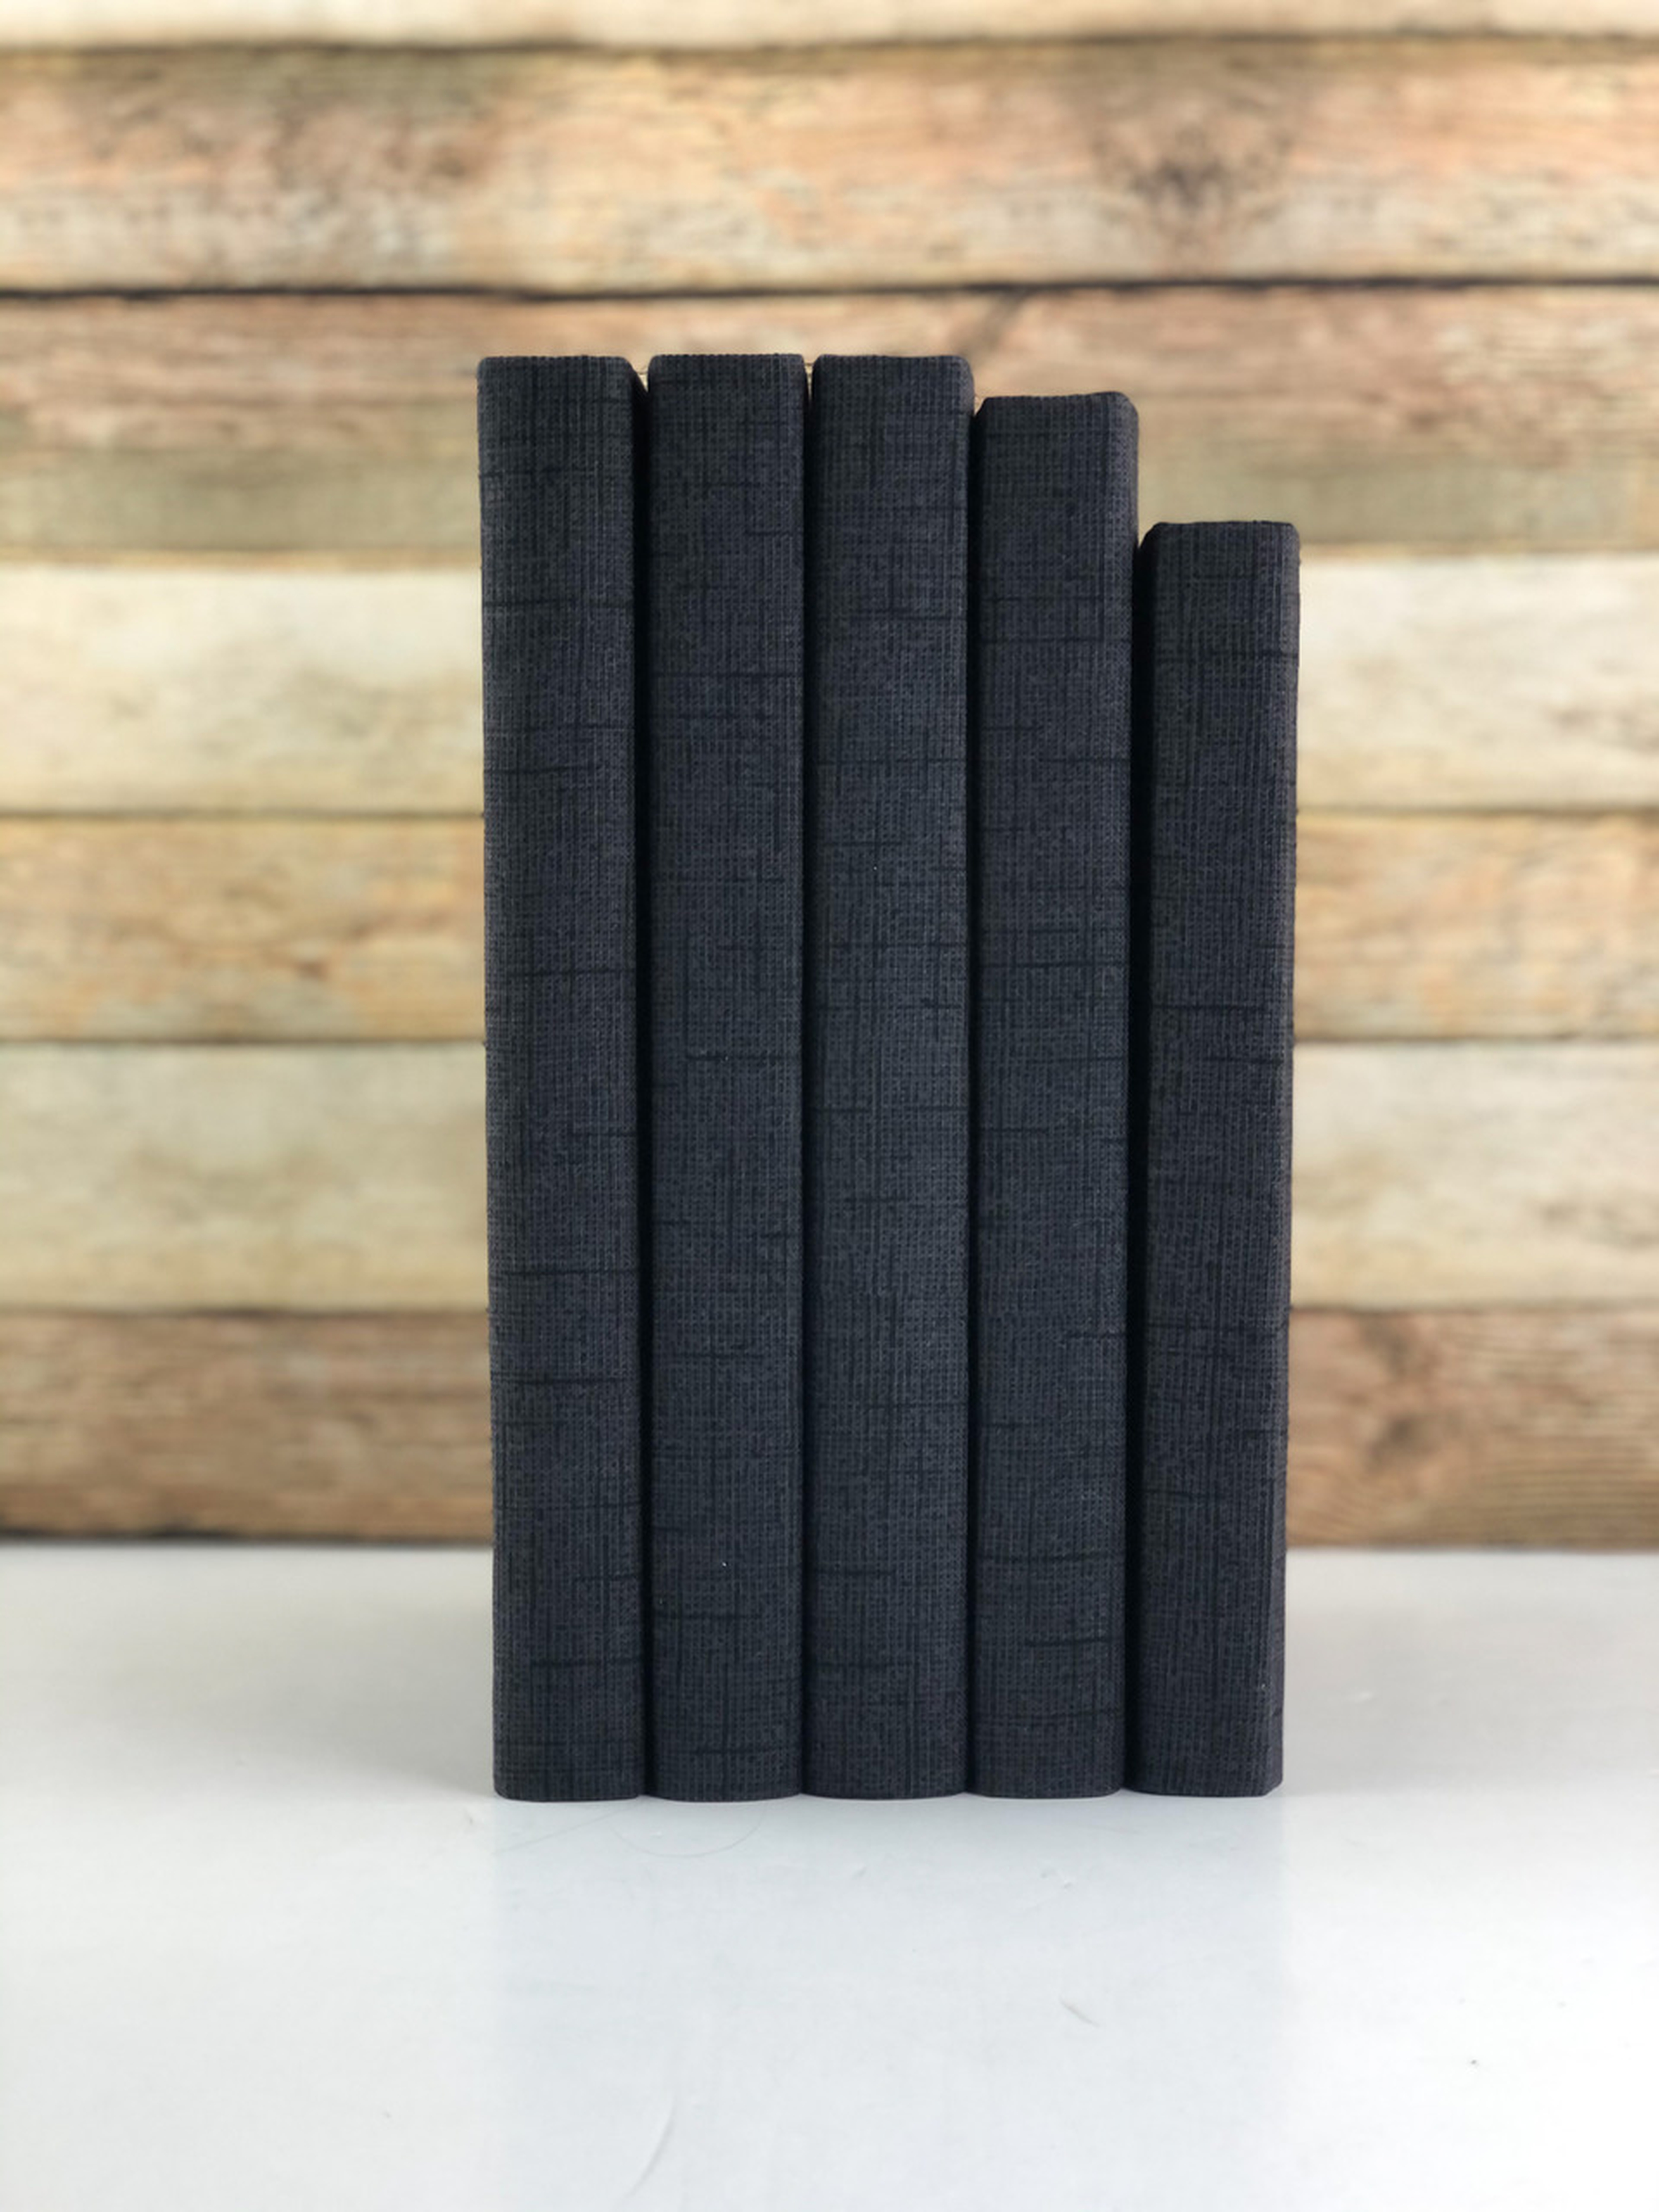 Decorative Books, Textured Black, Set of 5 - Havenly Essentials